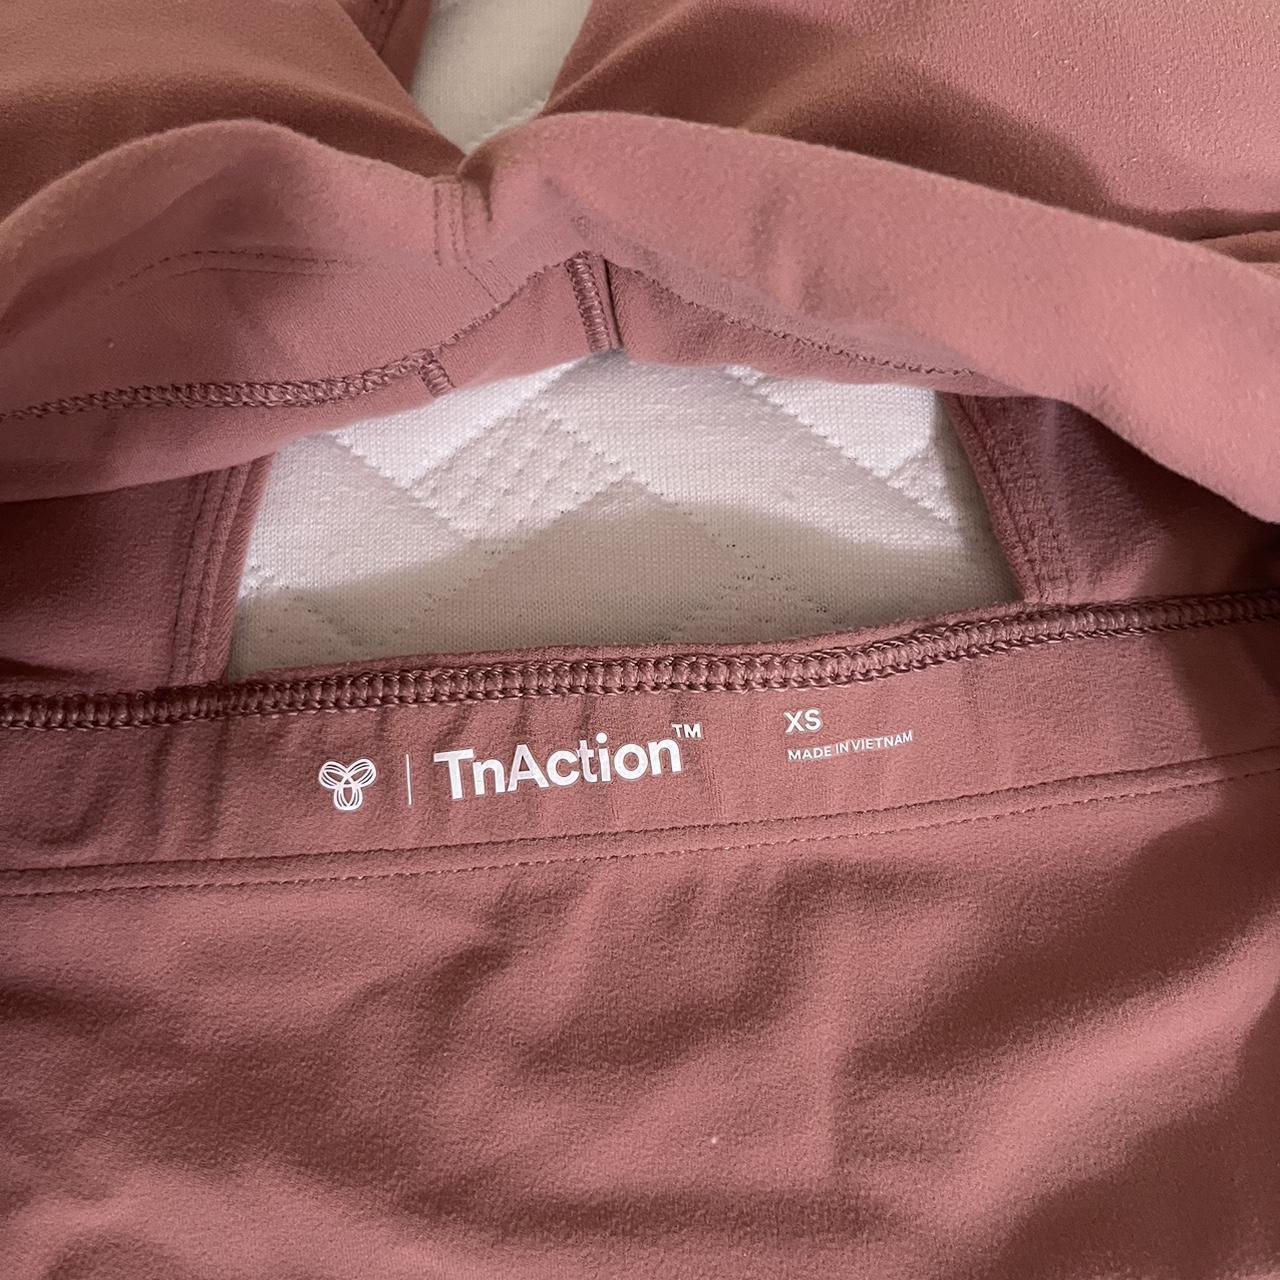 TnAction tan action leggings pink XS aritzia butter - Depop